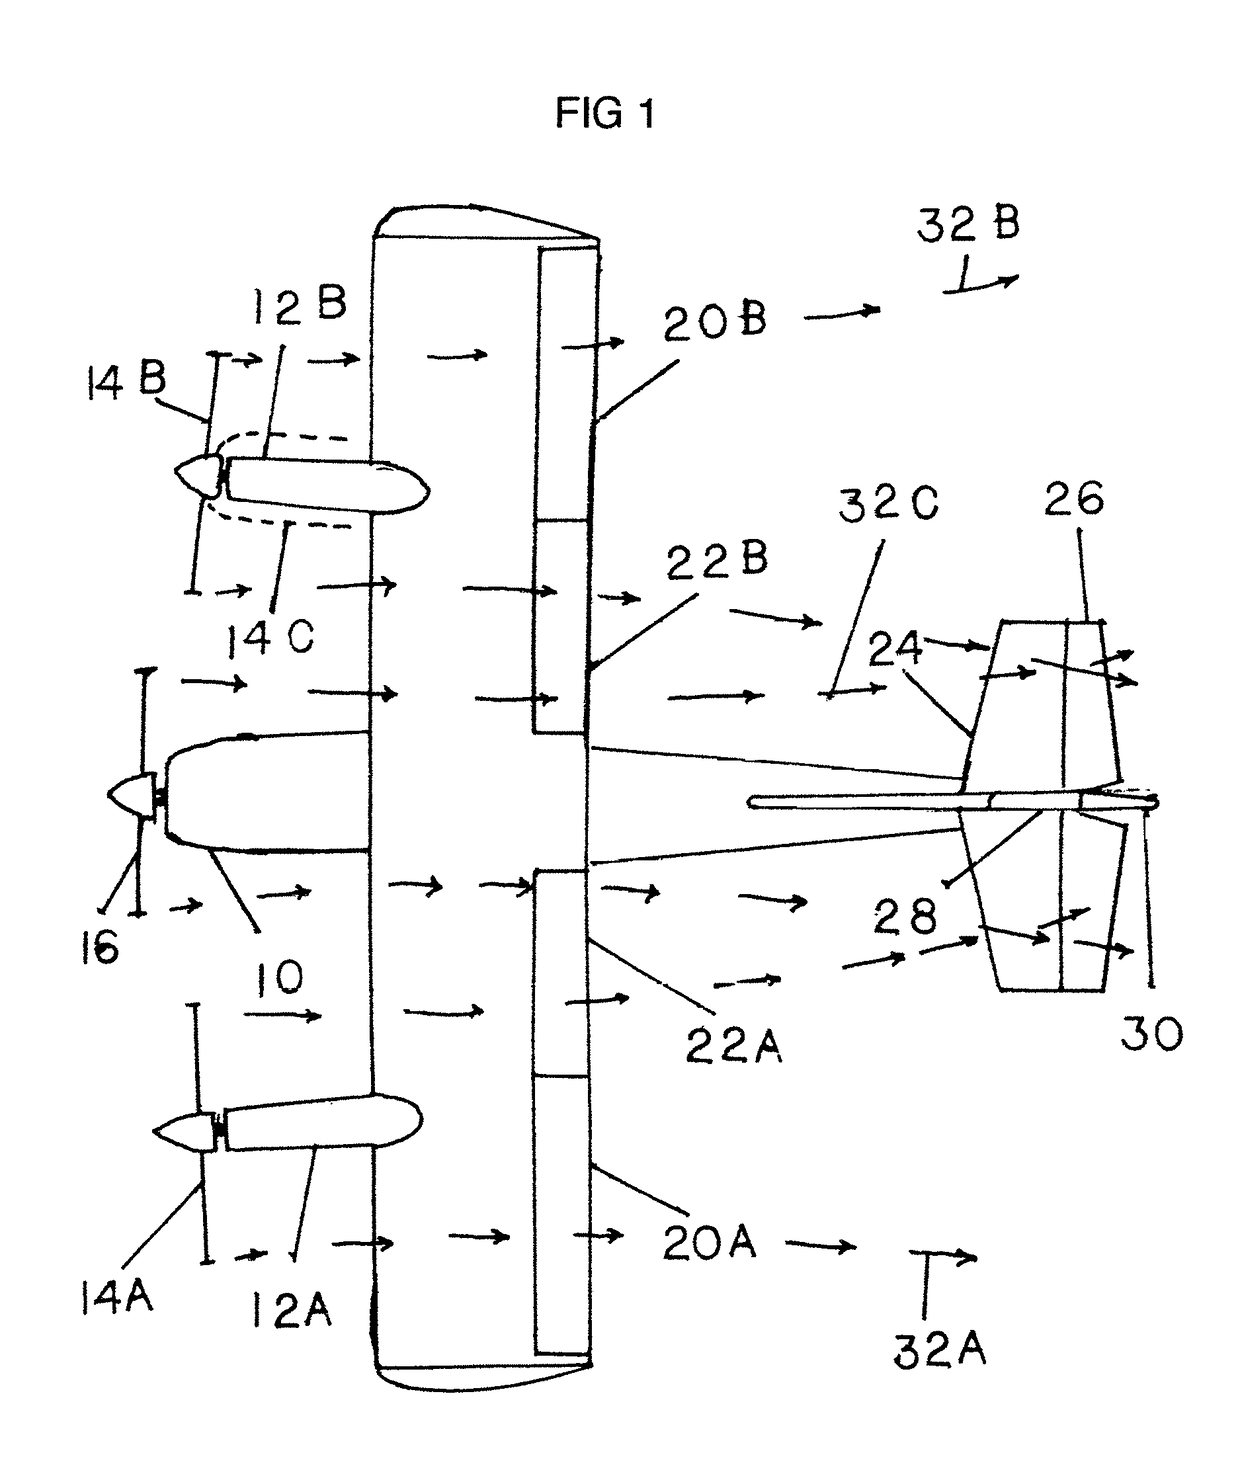 Full-segregated thrust hybrid propulsion for airplanes